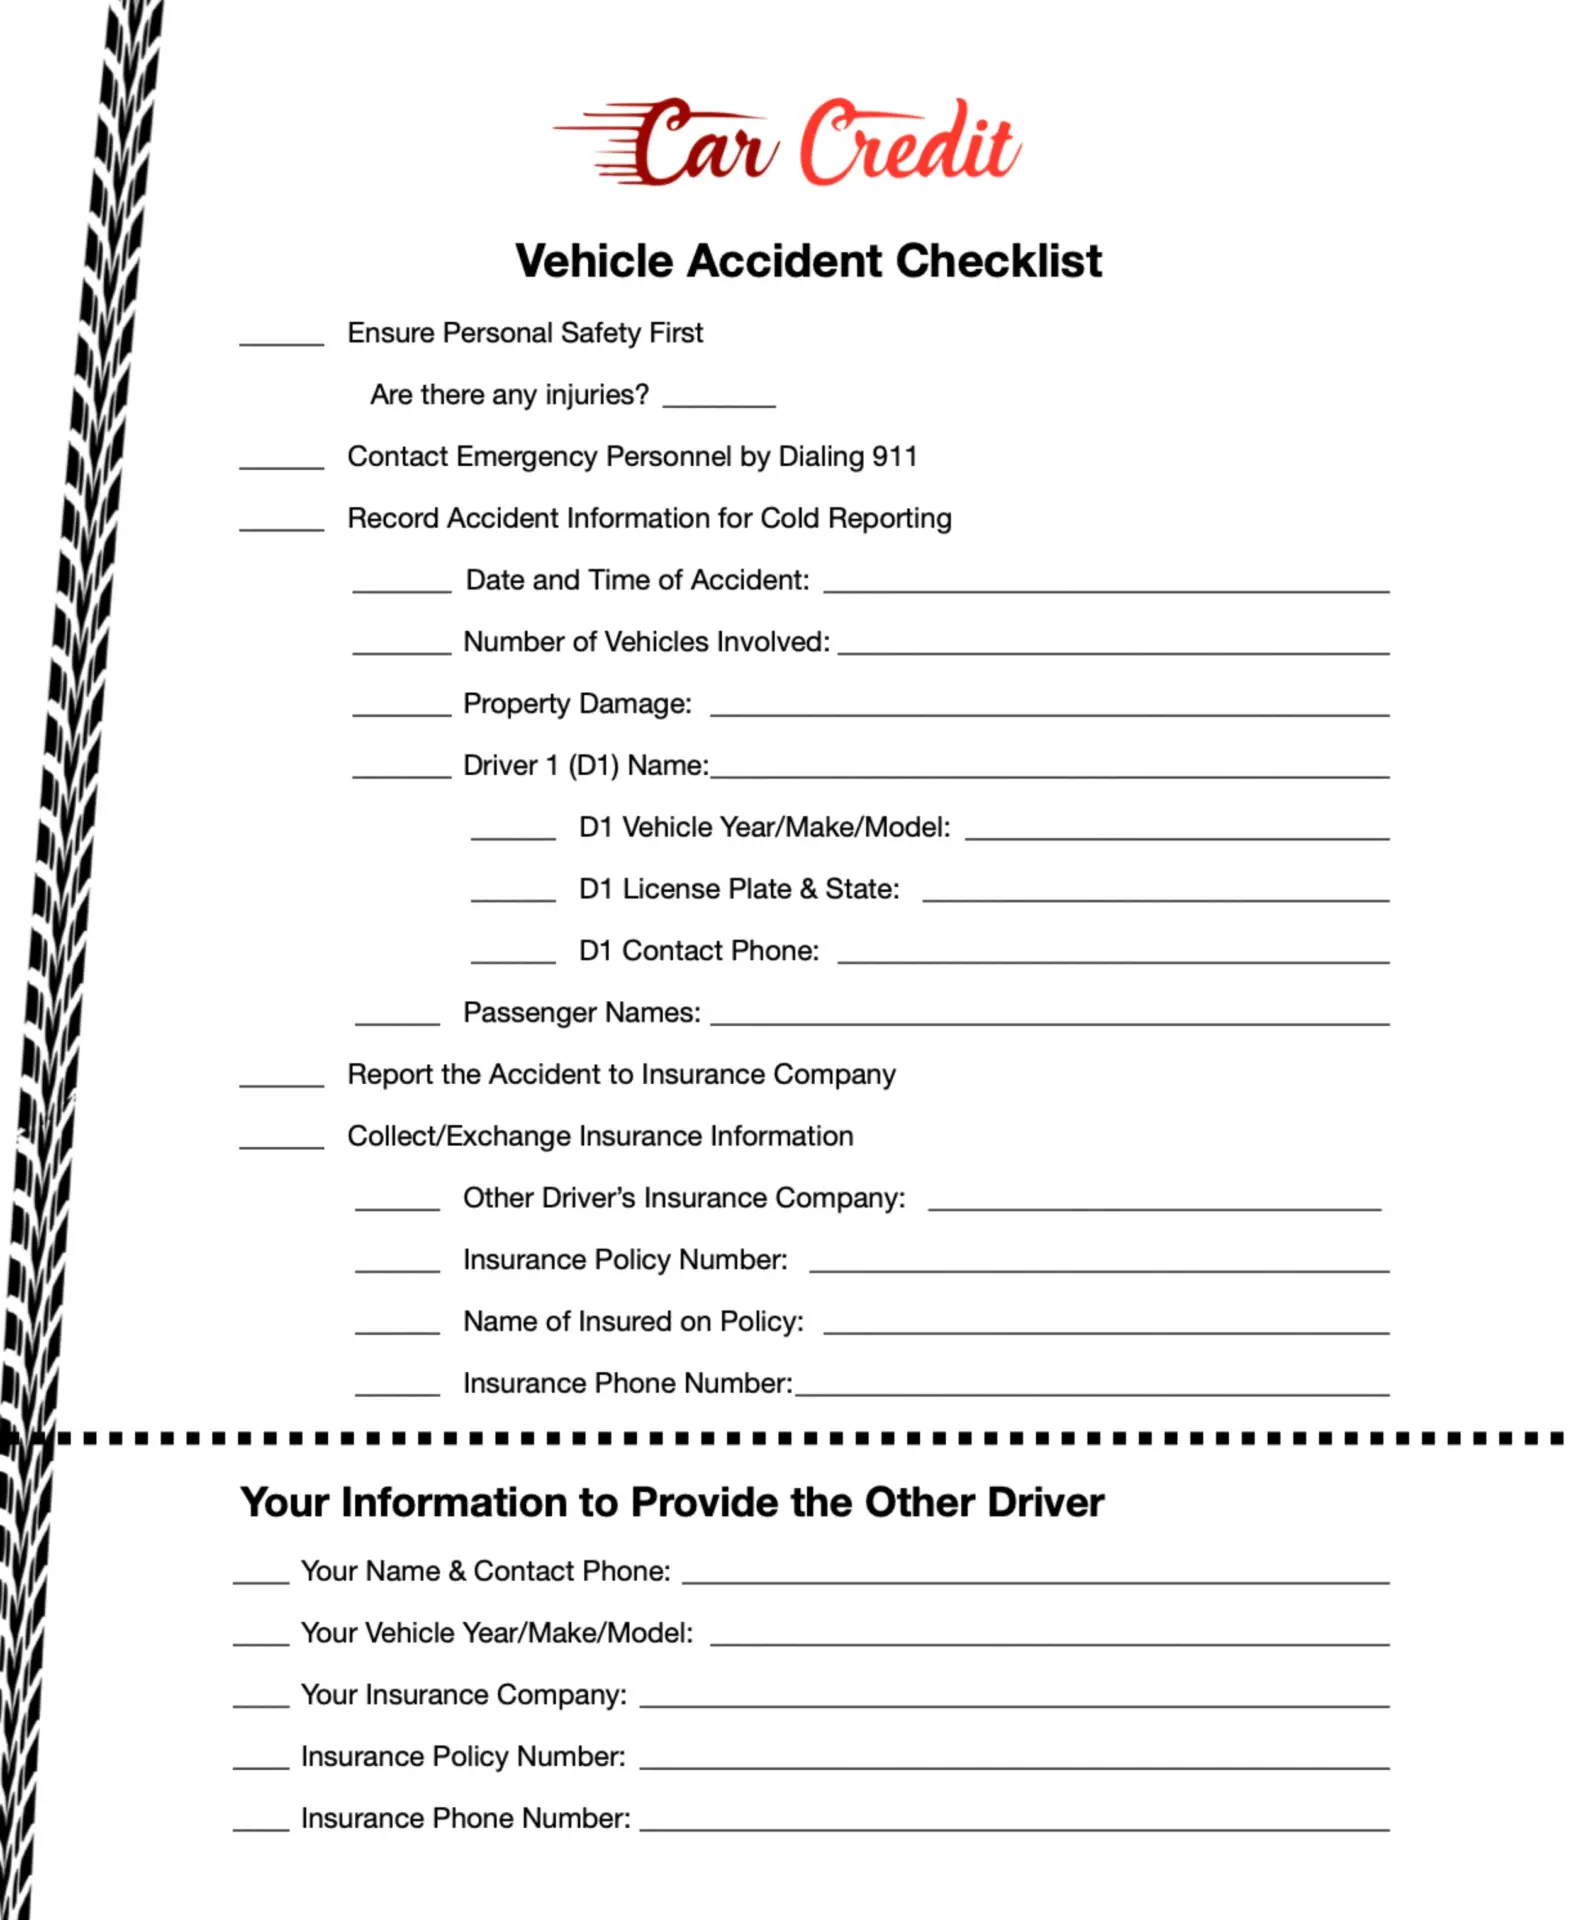 Vehicle Accident Checklist Img.1@3x